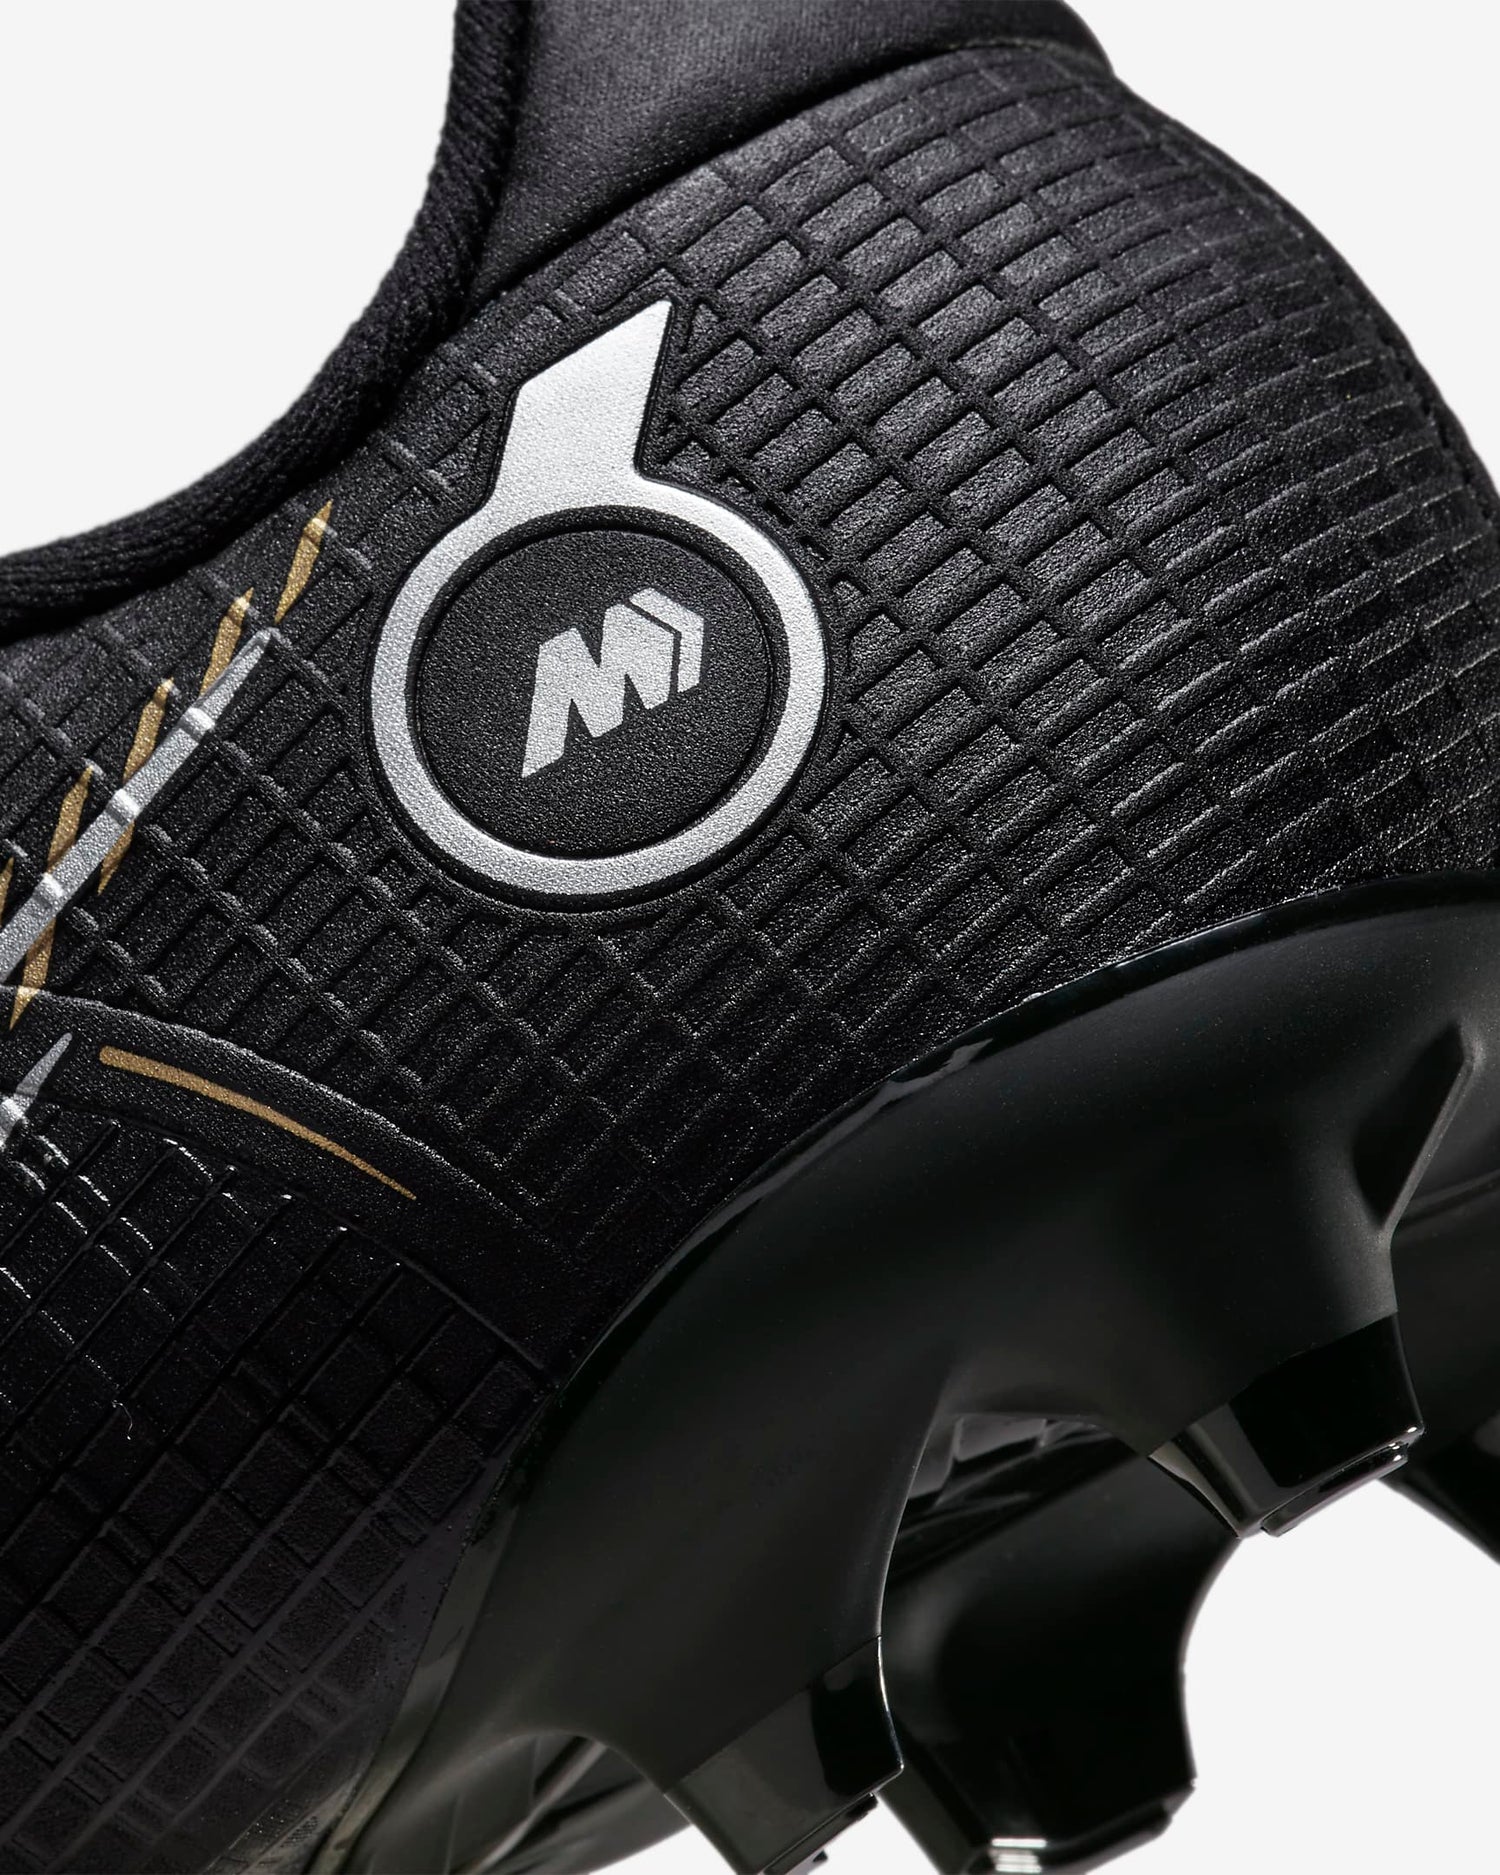 Nike JR Vapor 14 Academy FG-MG - Black-Gold-Silver (Detail 3)